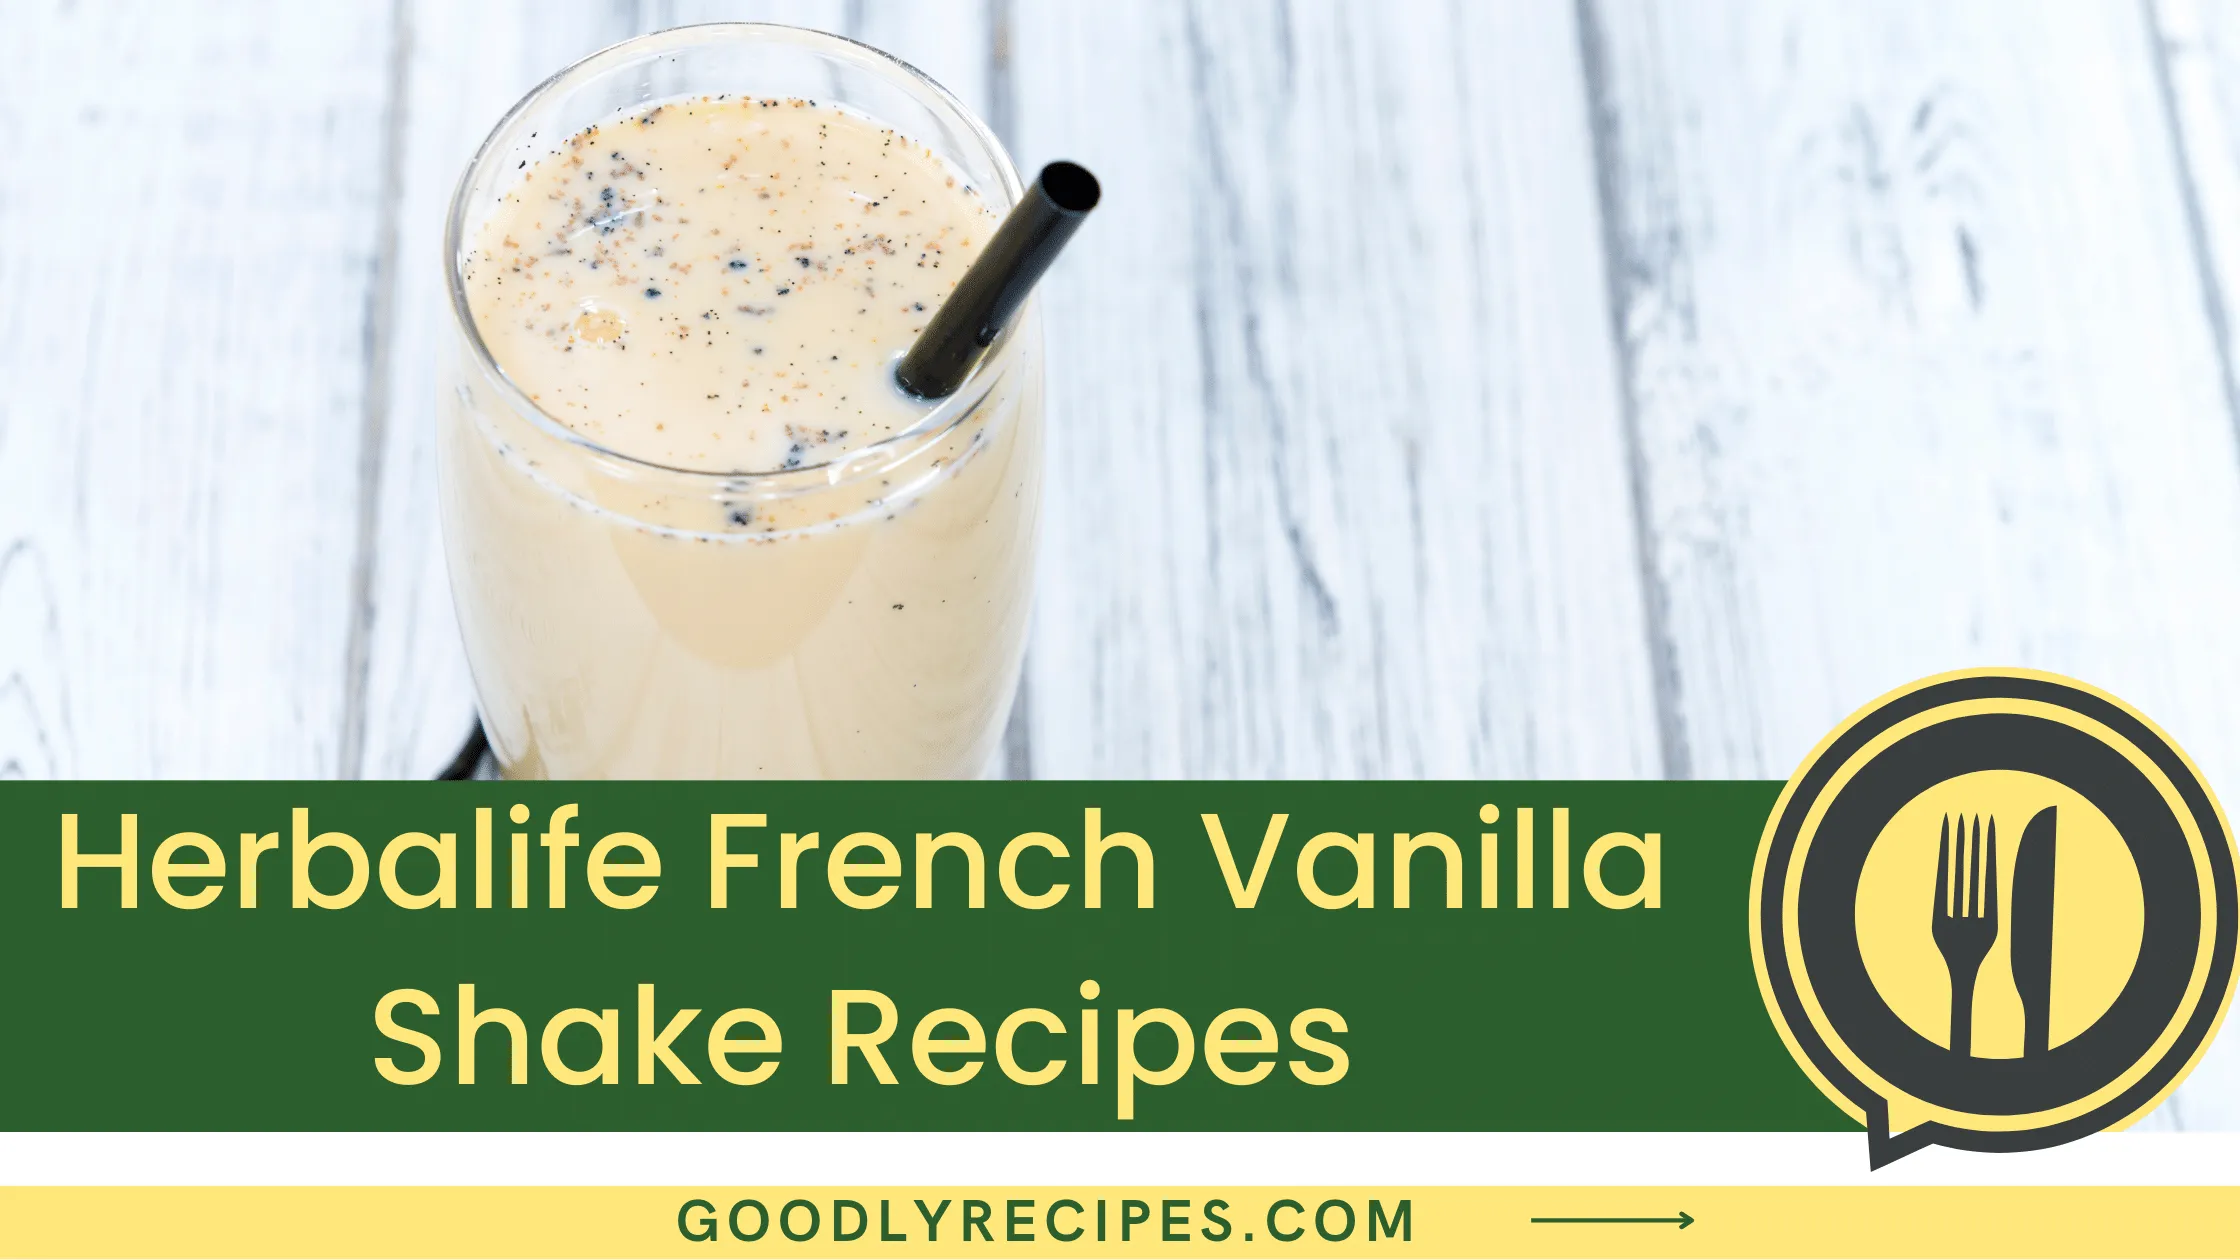 Herbalife French Vanilla Shake Recipe - For Food Lovers